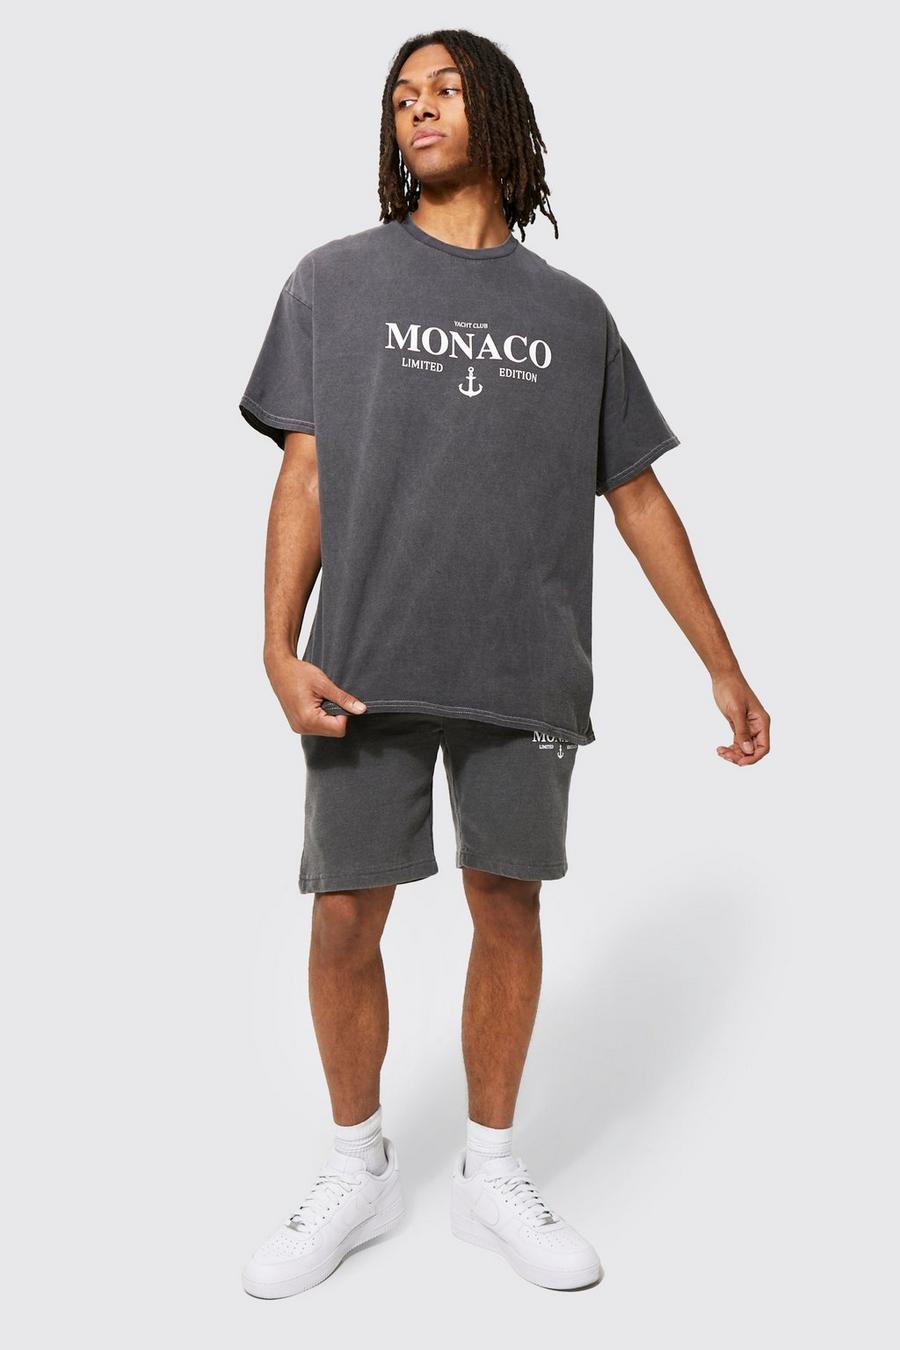 Charcoal grey Oversized Monaco T-shirt And Short Set